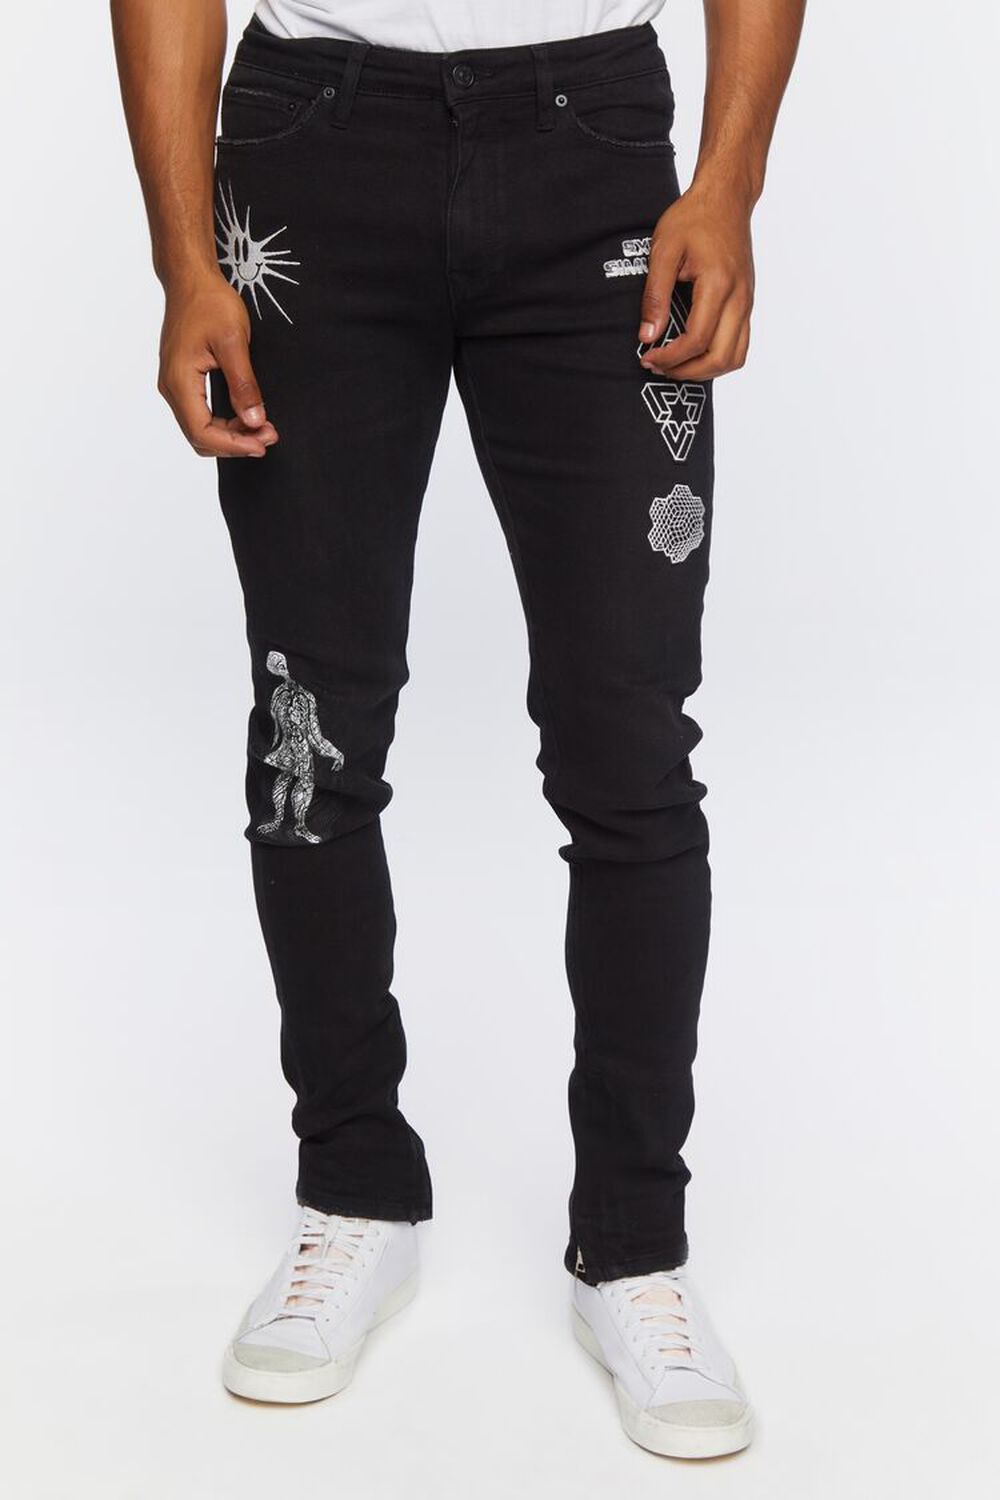 BLACK/WHITE Zip-Hem Embroidered Skinny Jeans, image 2